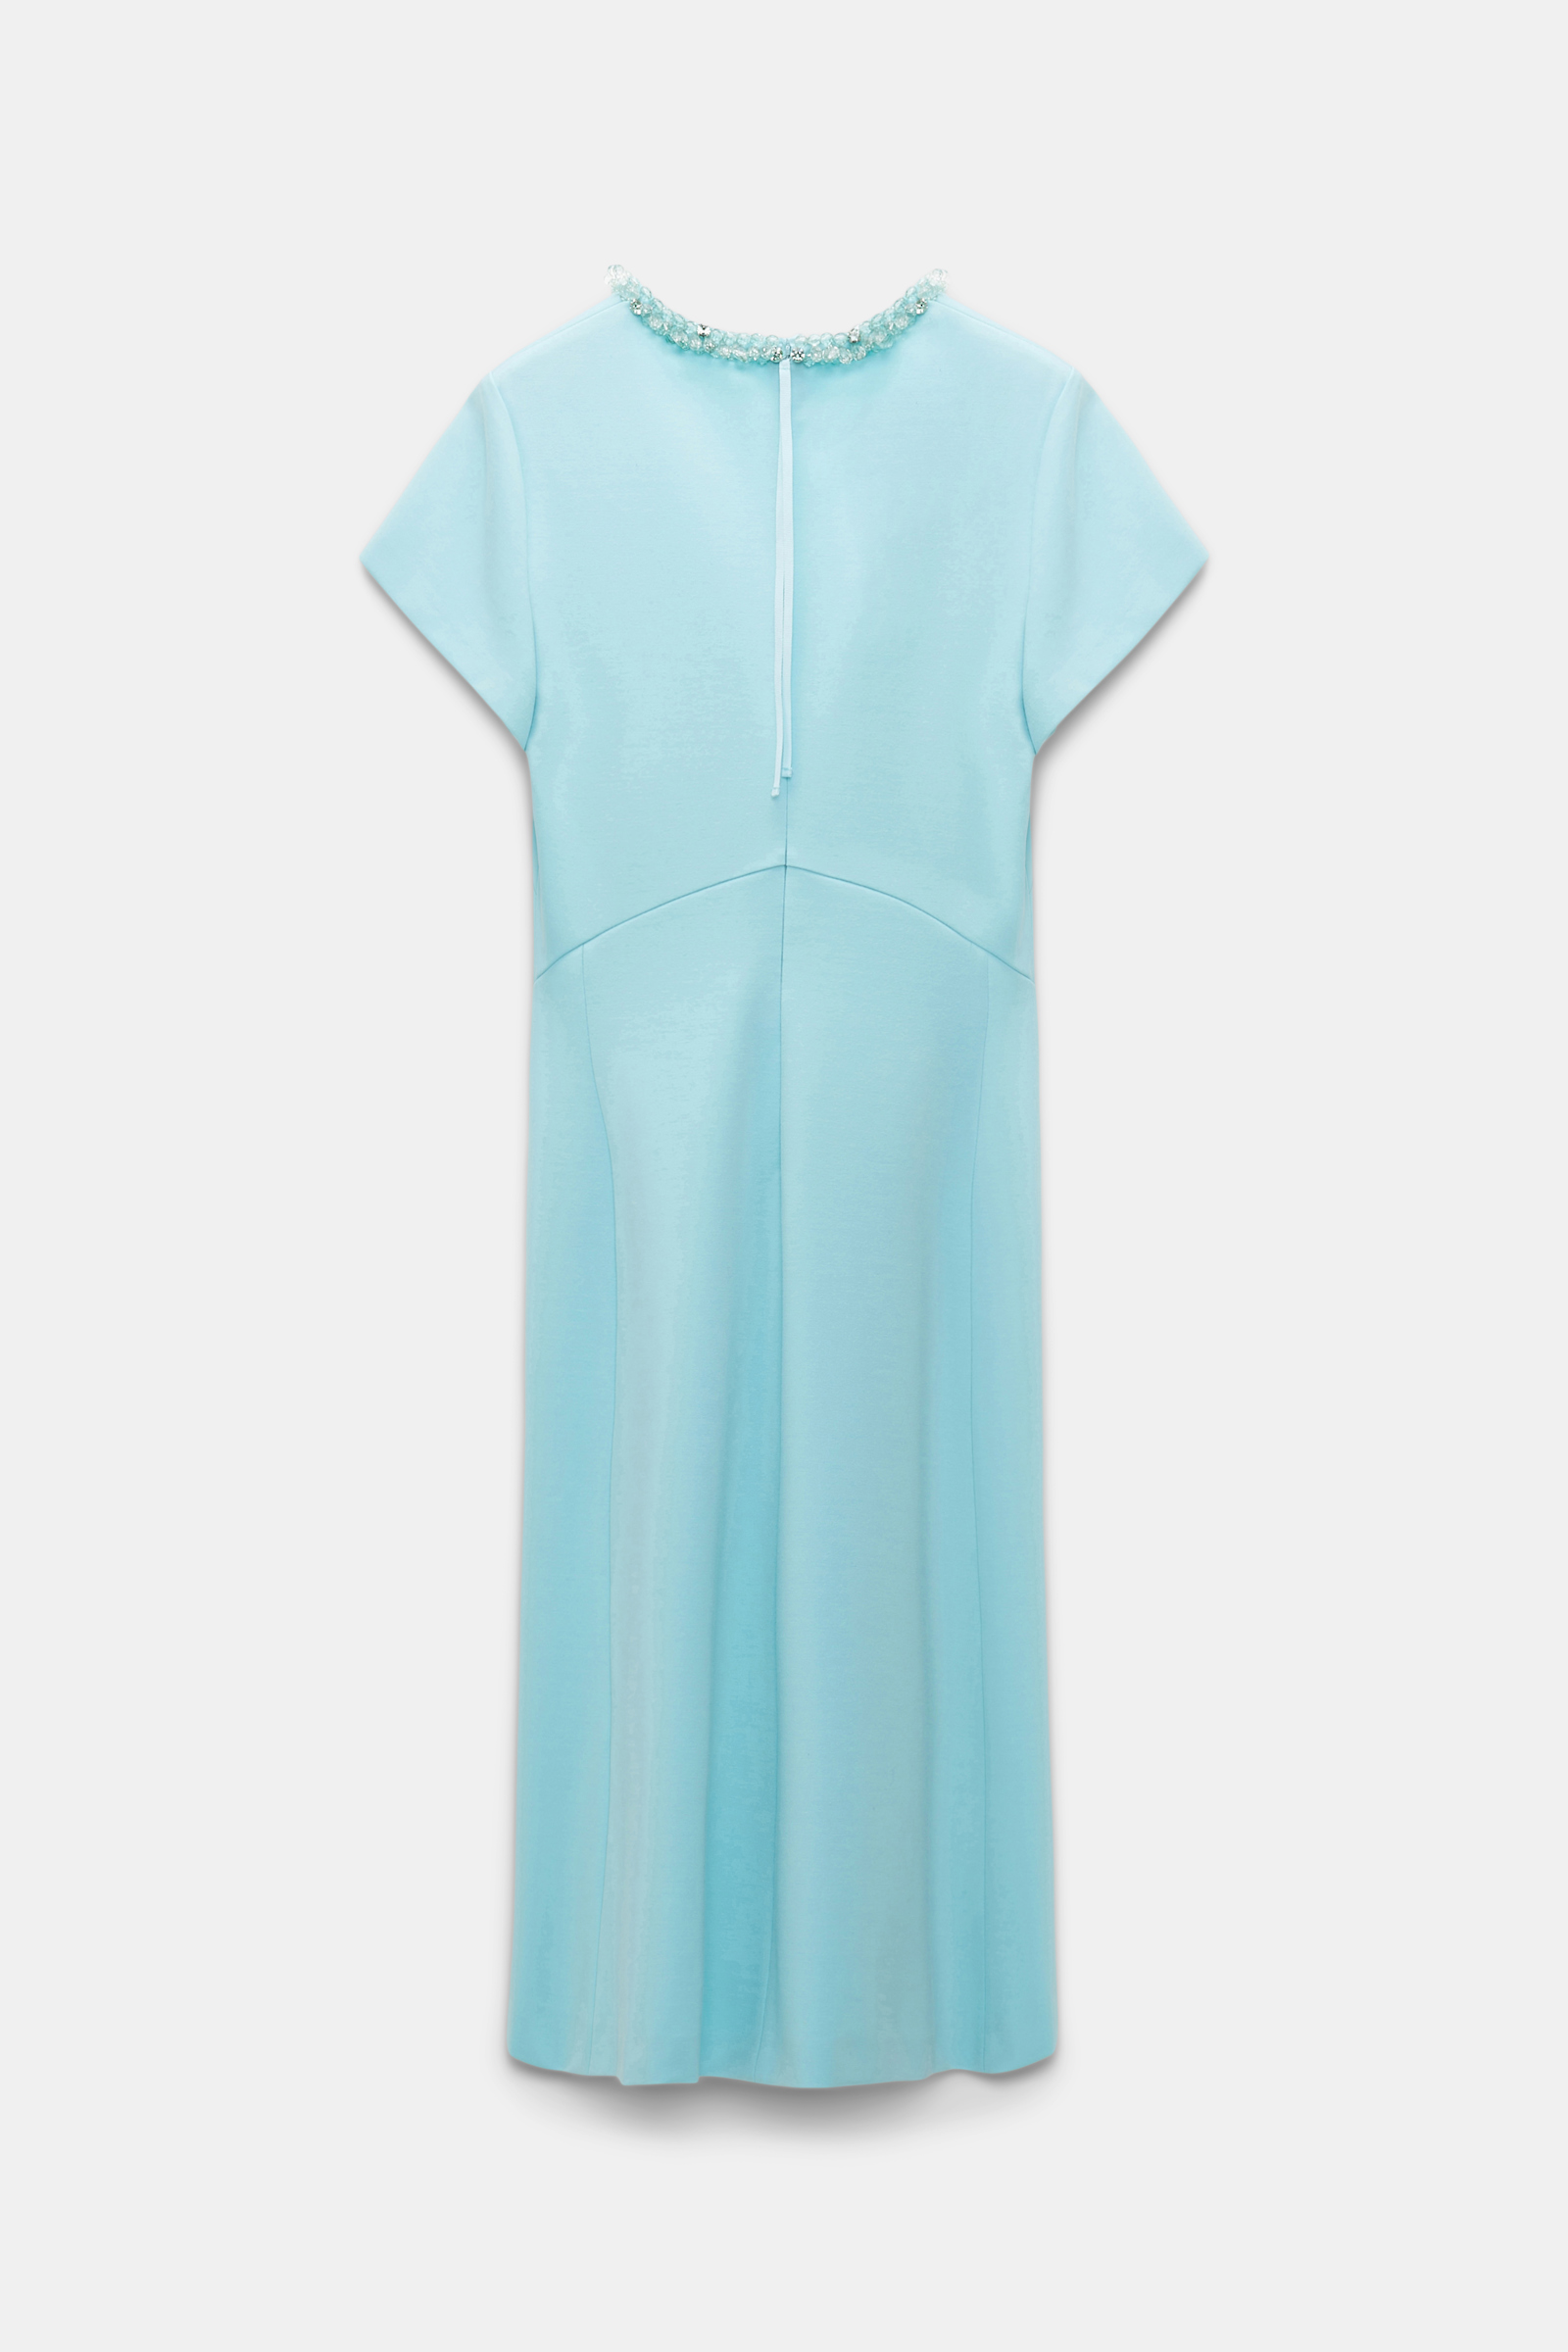 Dorothee Schumacher Punto Milano hourglass dress with embellished V-neckline soft turquoise